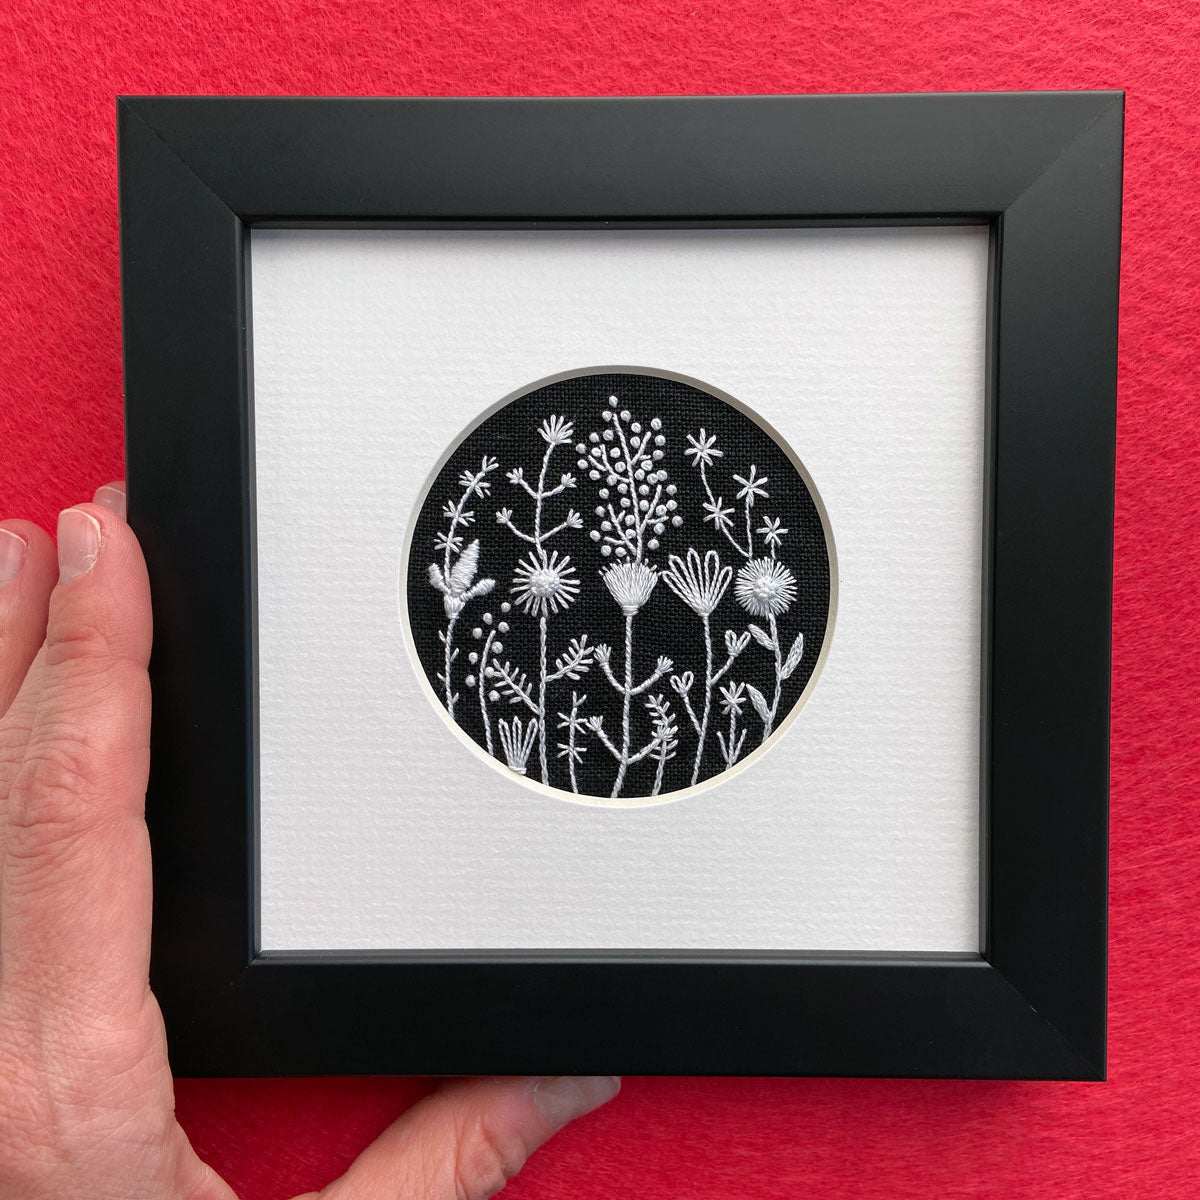 Happy Cactus Designs Hand Embroidered Artwork • Image and design copyright Happy Cactus Designs LLC 2019